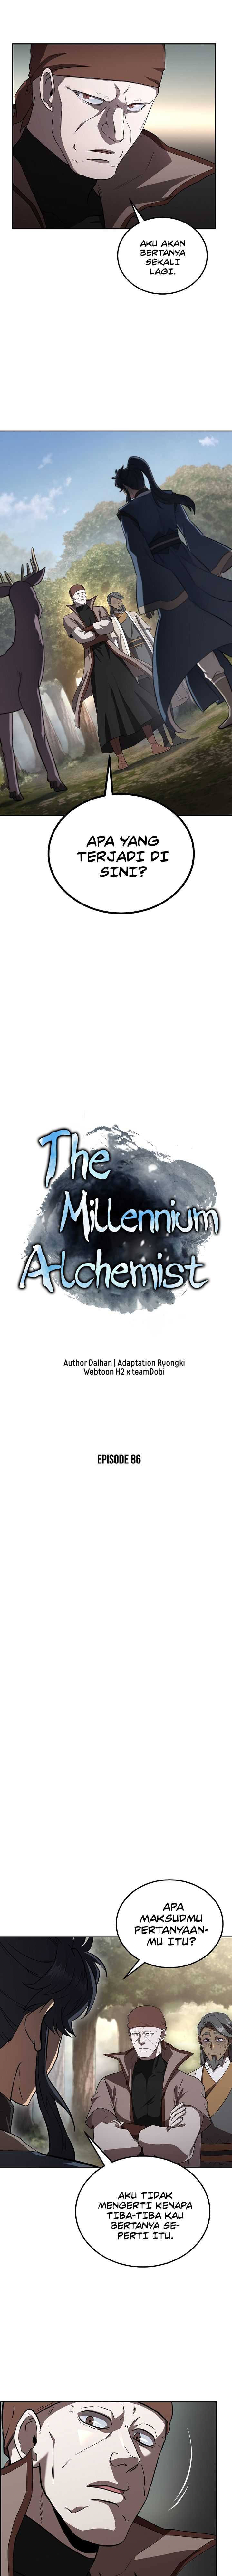 Millennium Spinning Chapter 86 - 105